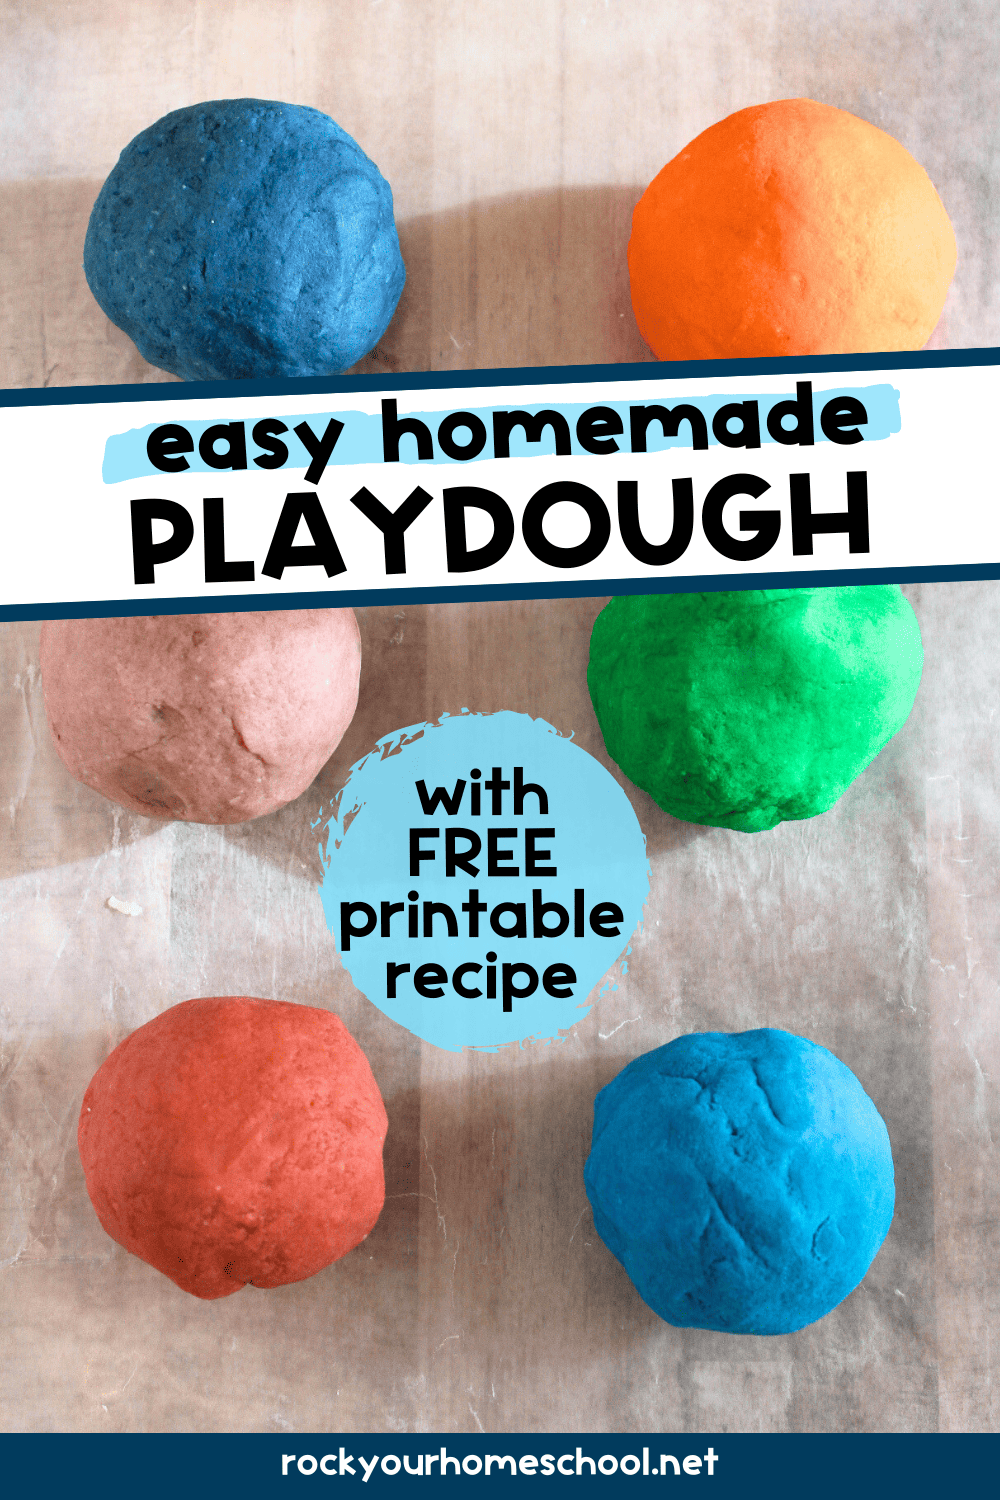 Easy Homemade Playdough: How to Make and Free Printable Recipe